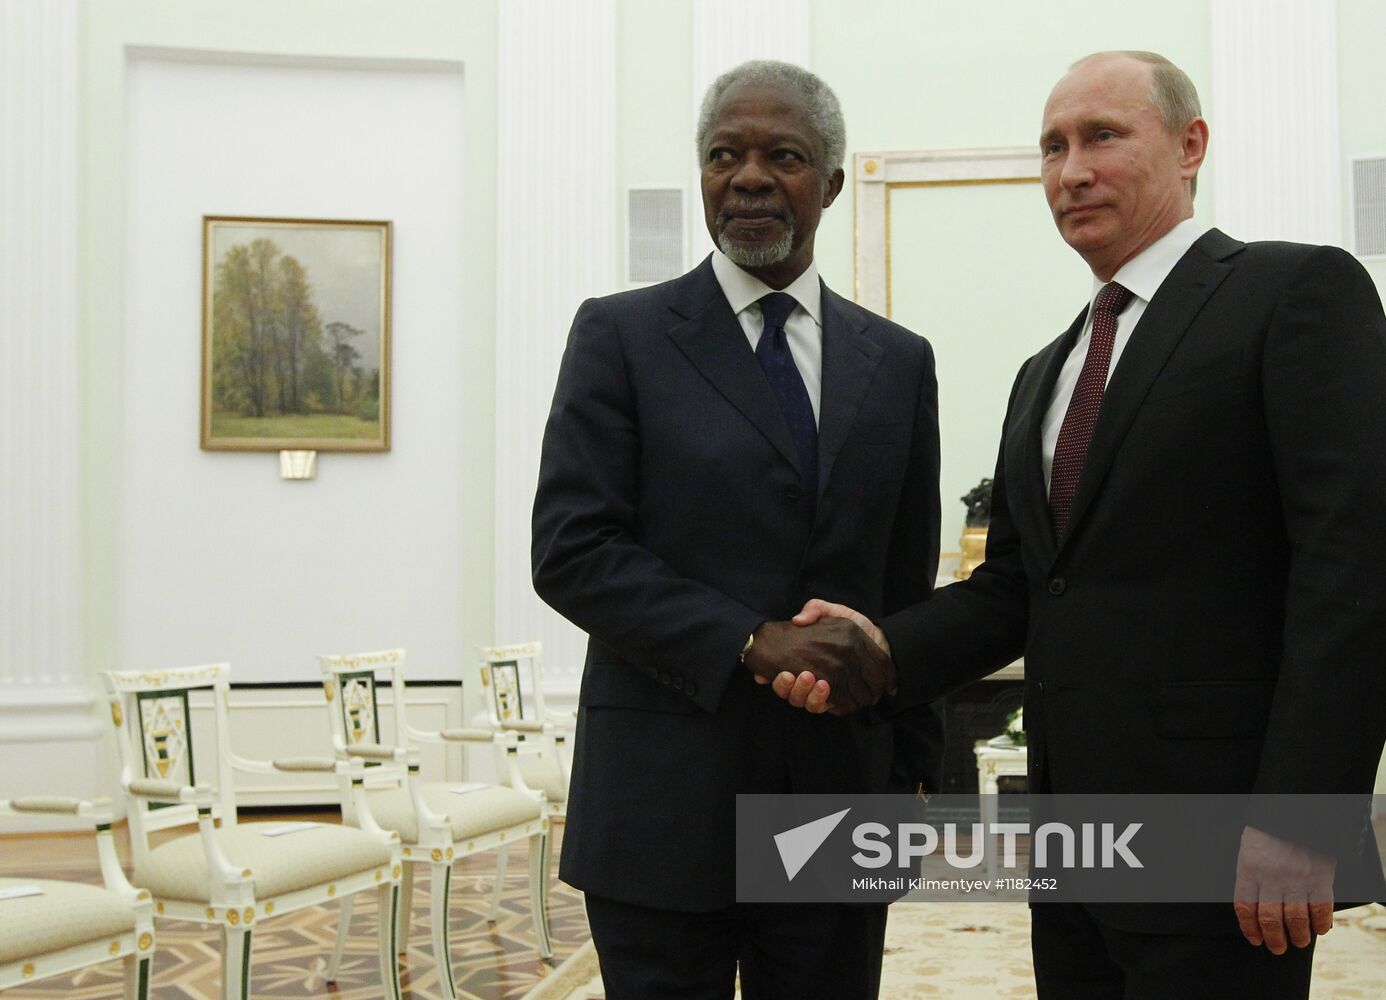 Vladimir Putin meets with Kofi Annan